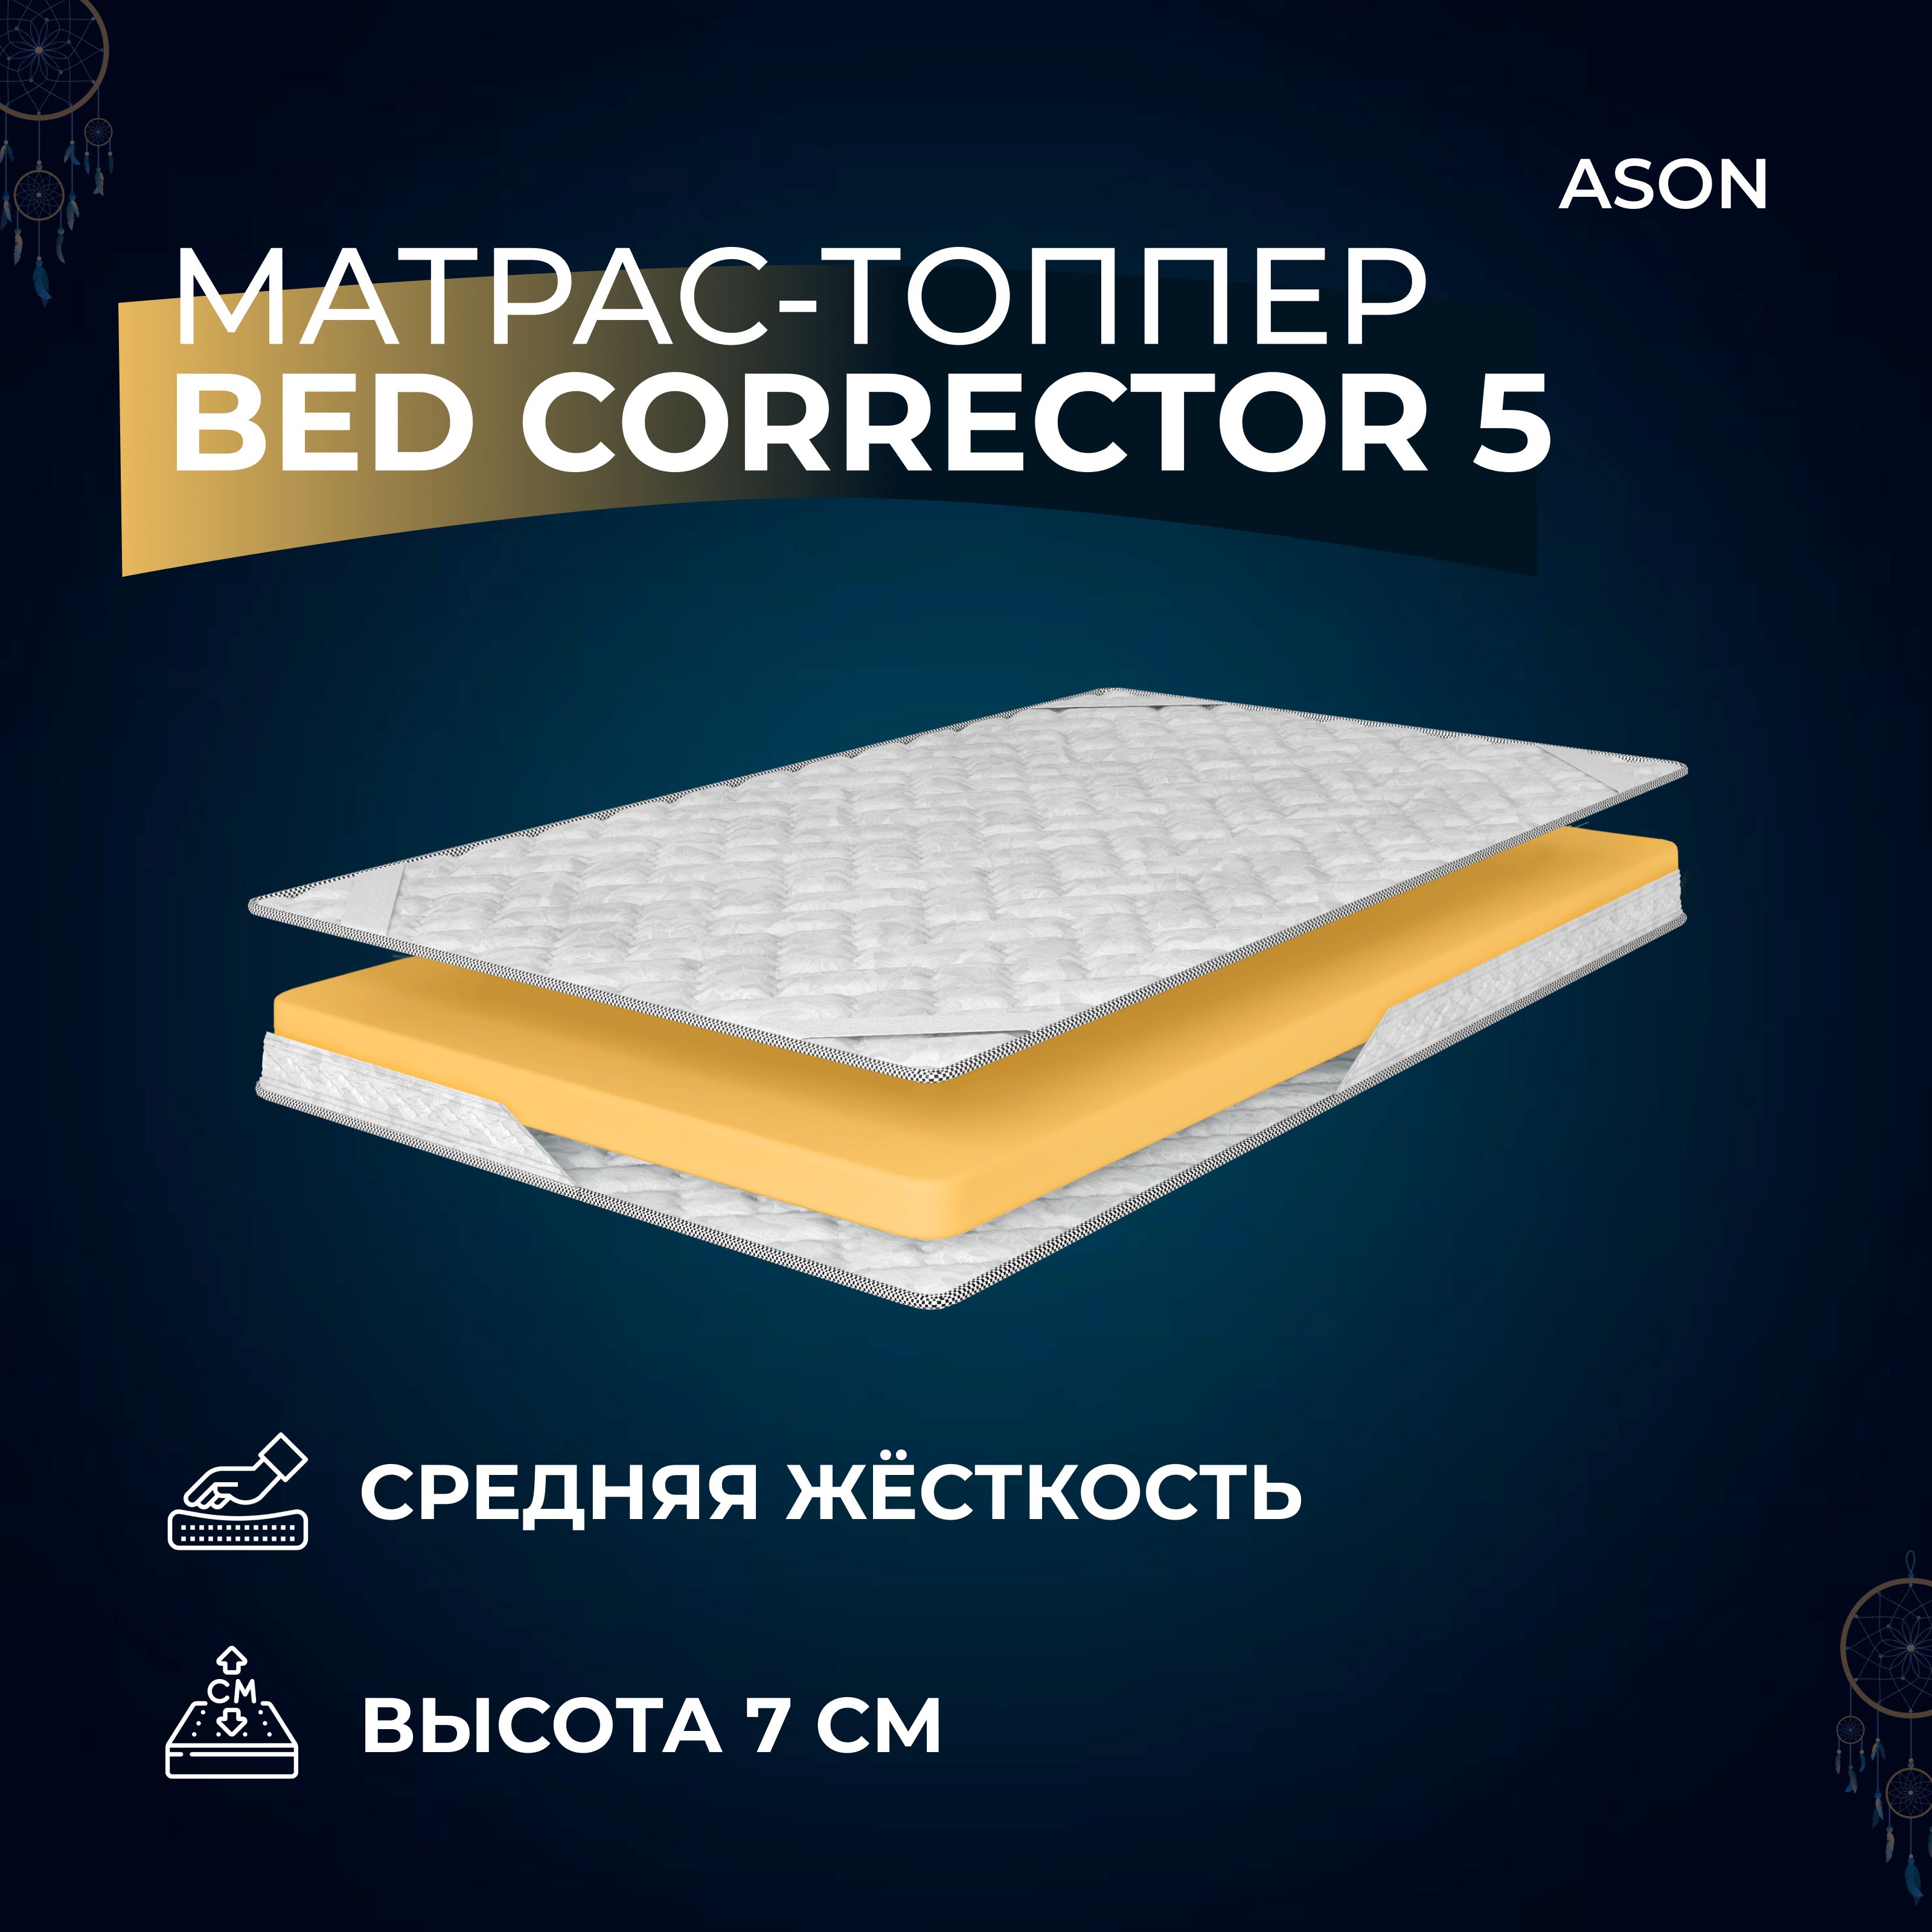 Матрас-топпер 170х200 Ason, Bed corrector 5